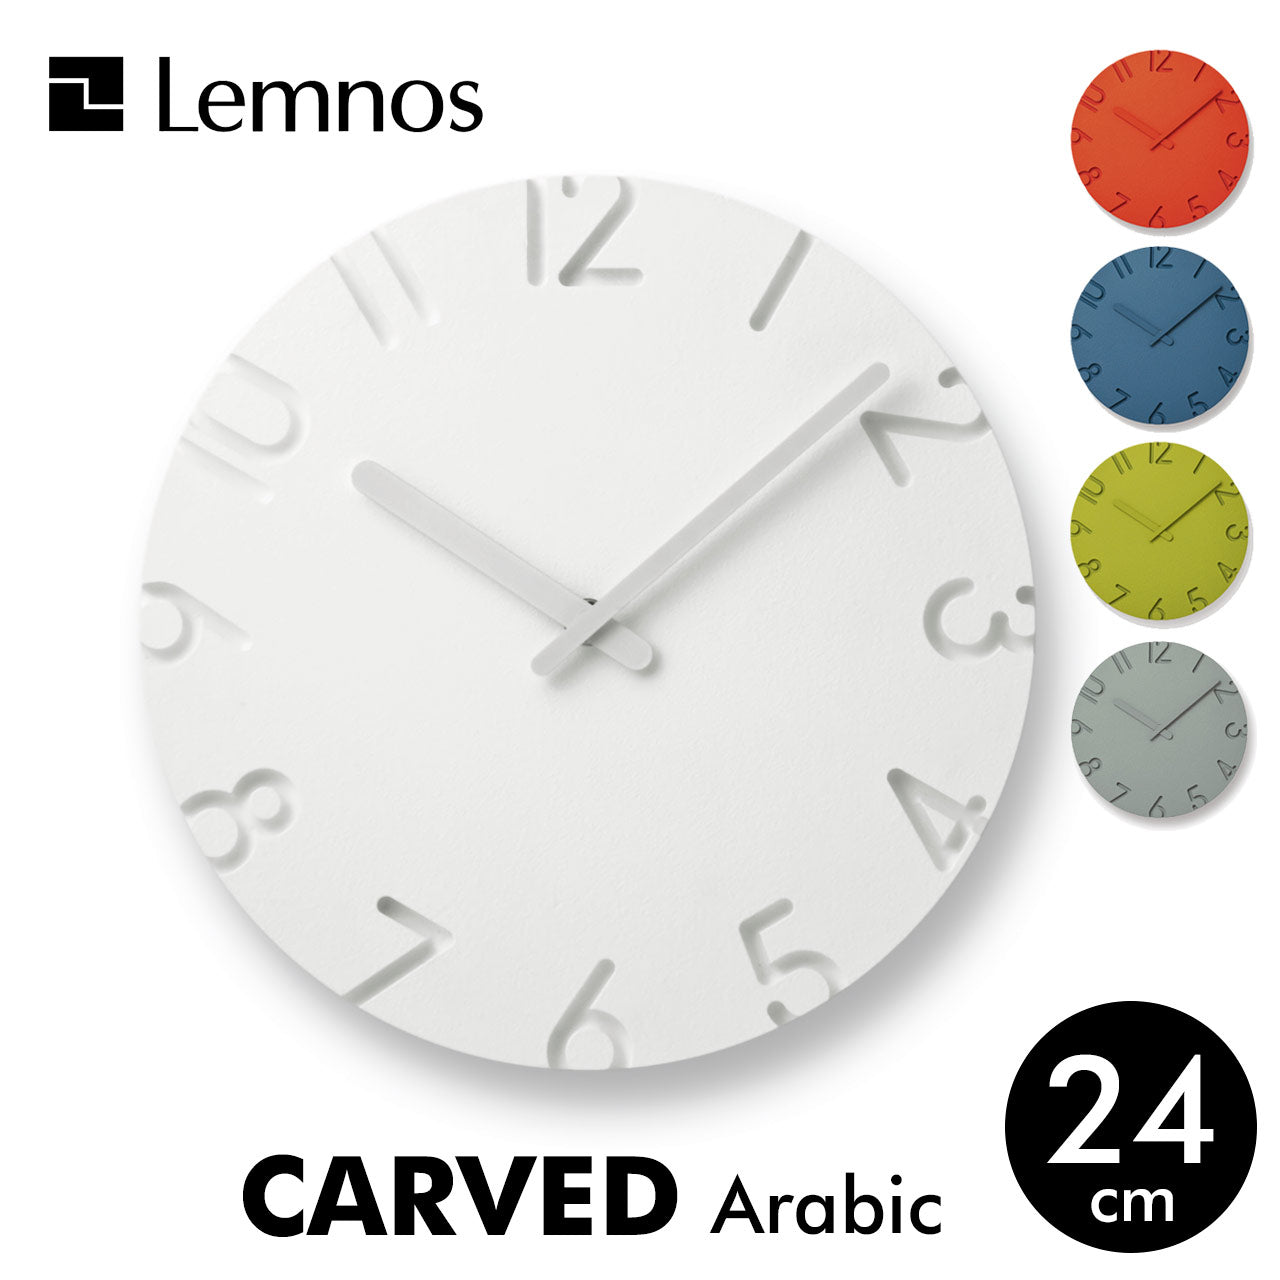 CARVED 壁掛け時計 Lemnos 掛け時計 Arabic NTL10-19 - インテリア時計